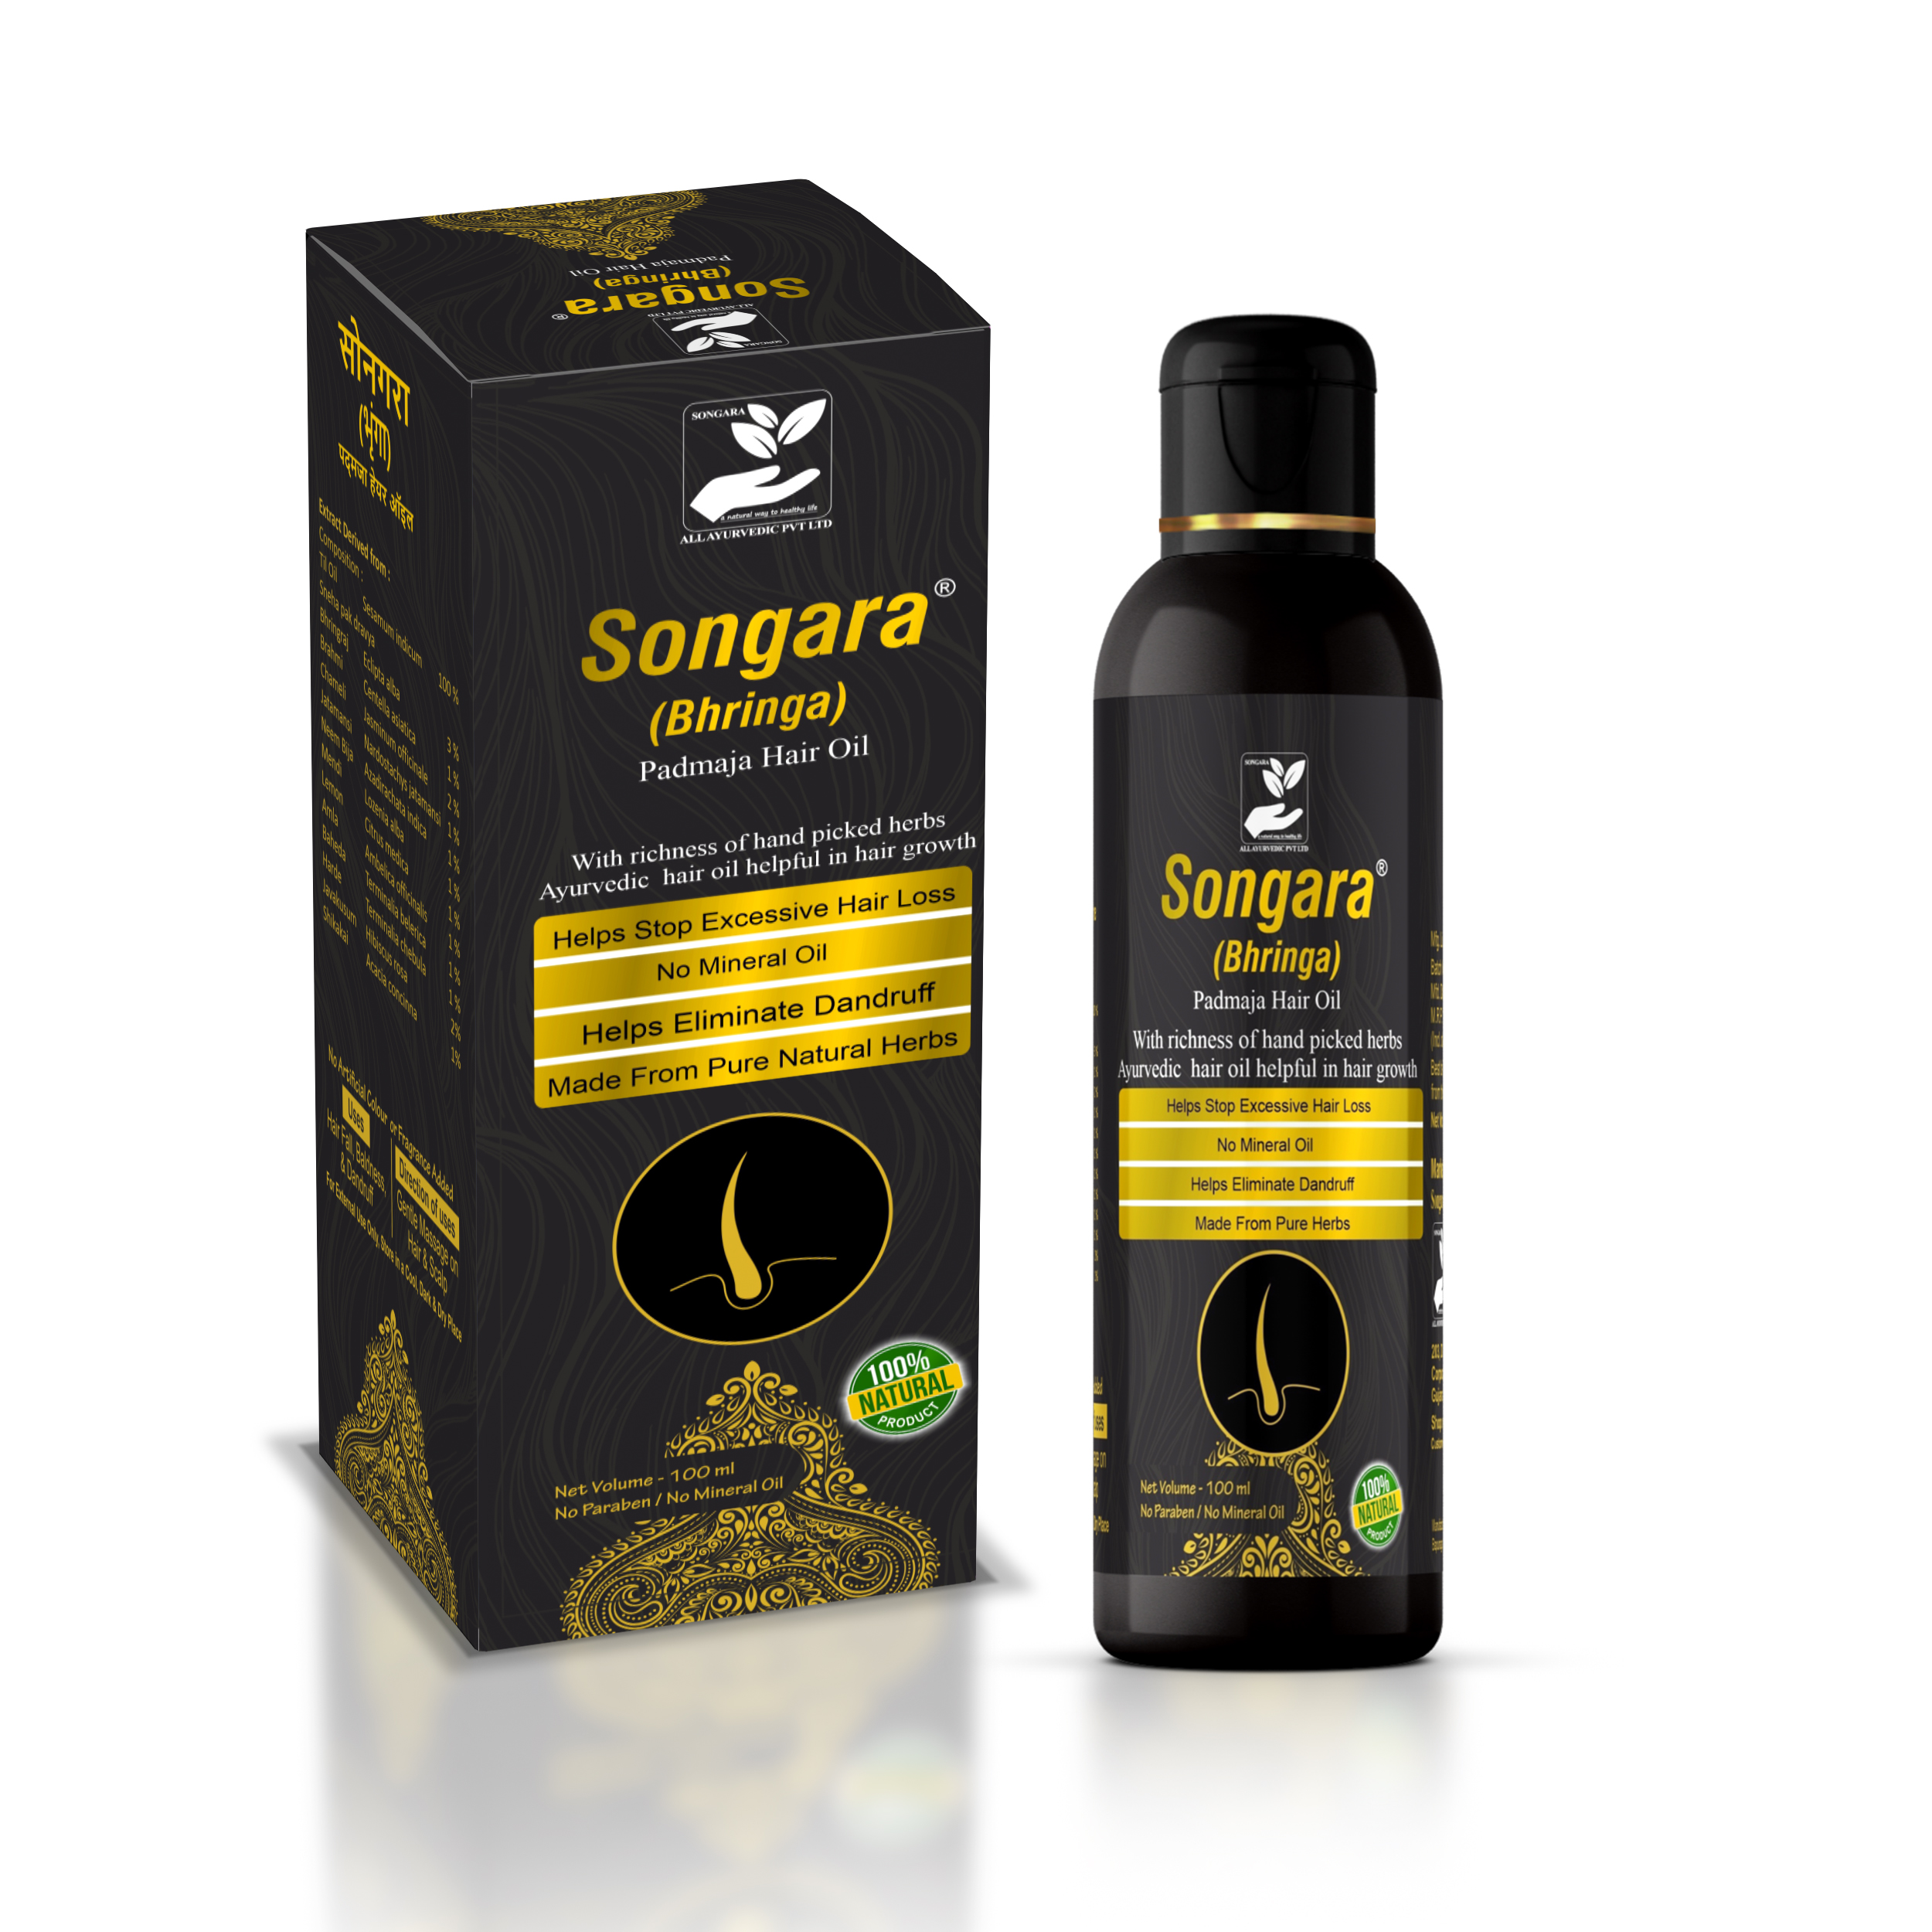 Songara Bhringa Ayurvedic Hair Oil & Shampoo